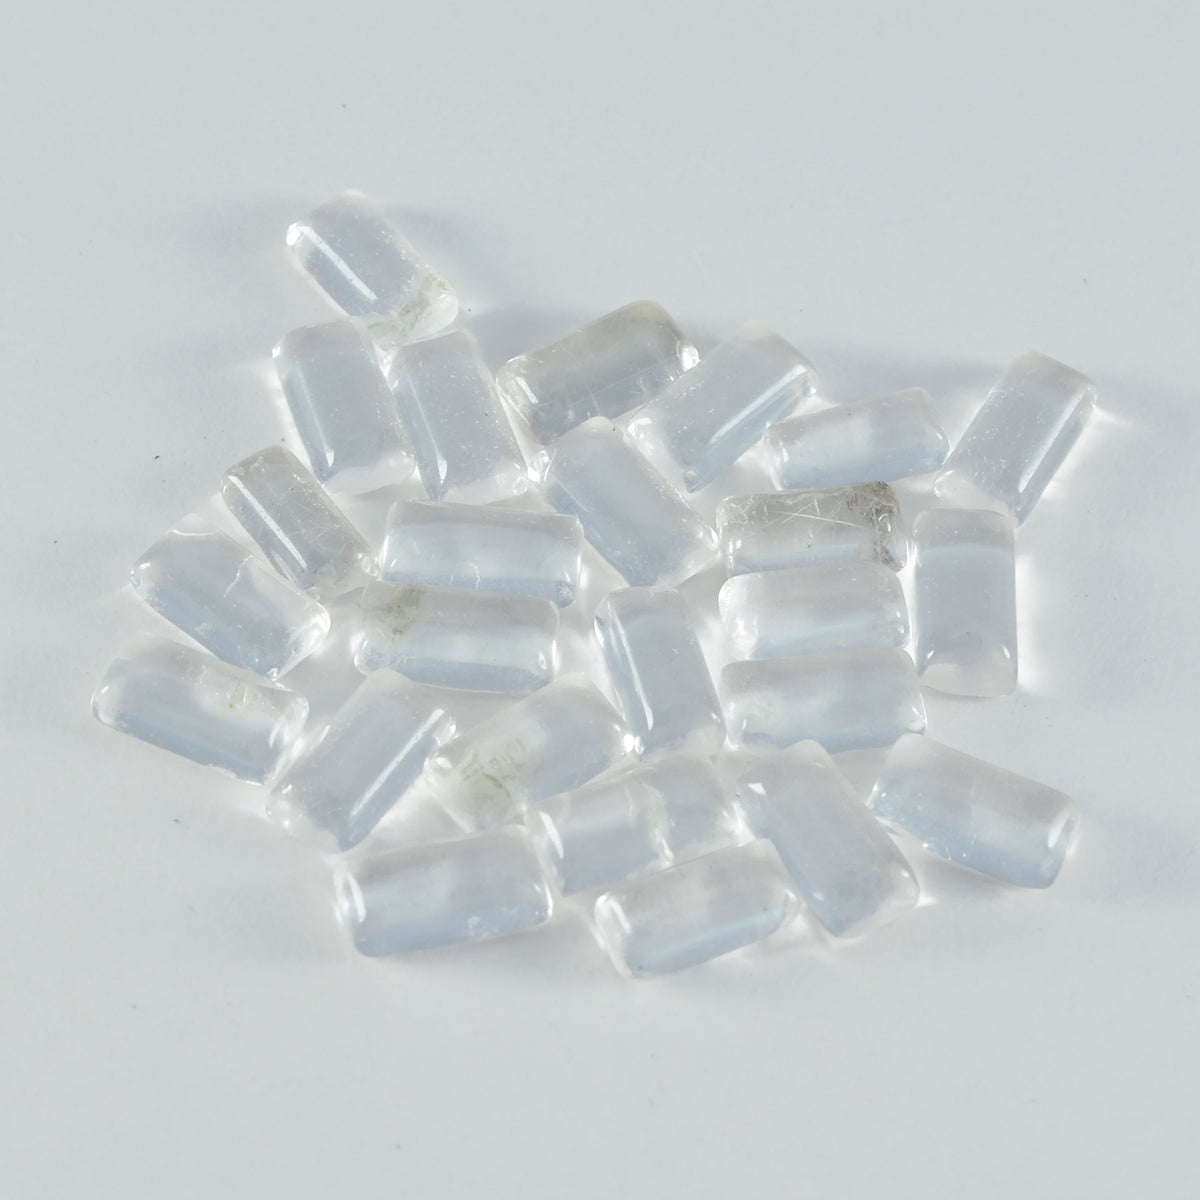 riyogems 1pc ホワイト クリスタル クォーツ カボション 4x8 mm バゲット形状 a+ 品質ルース宝石